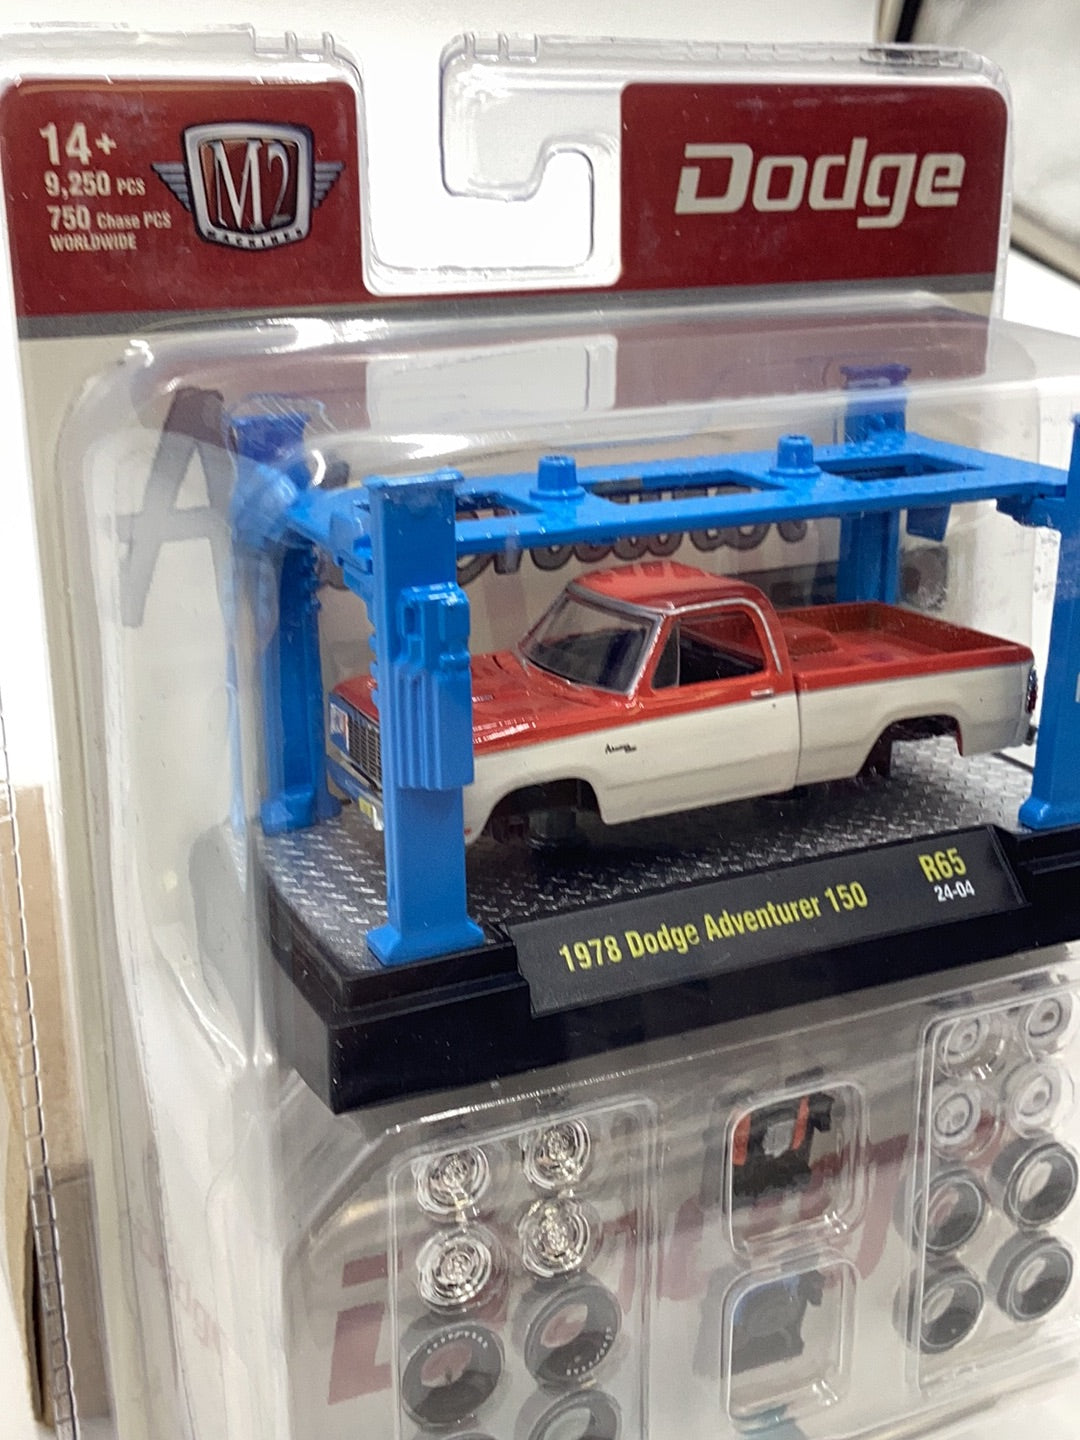 M2 Machines Model-Kit release R65 1978 Dodge Adventurer 150